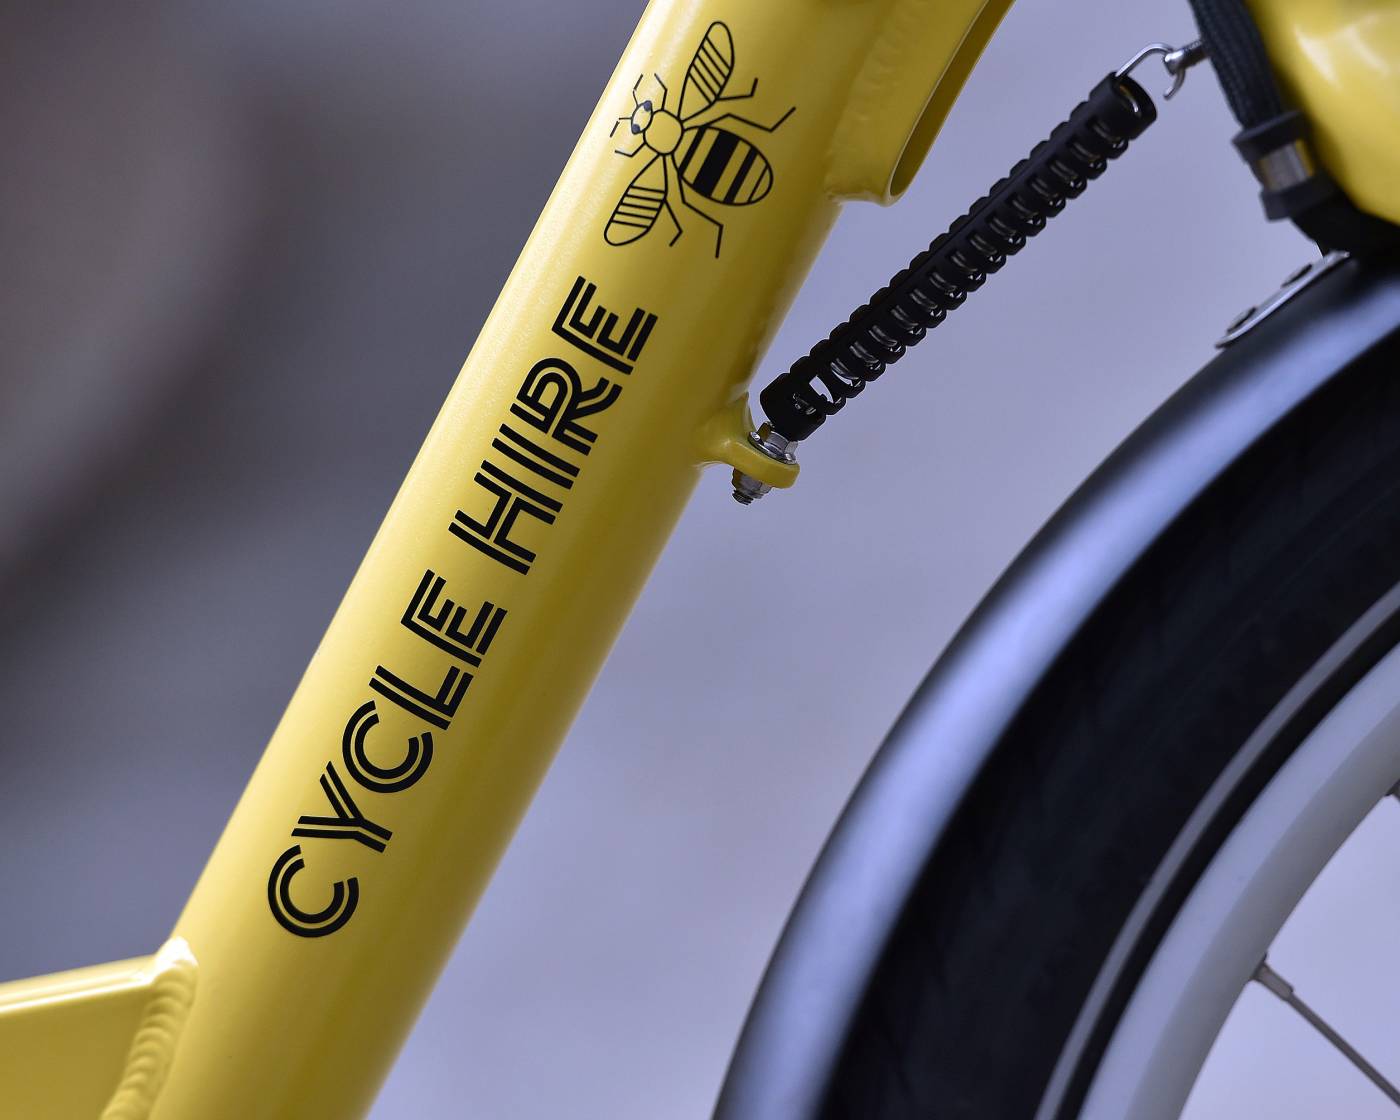 GM Bike hire cycle frame close-up